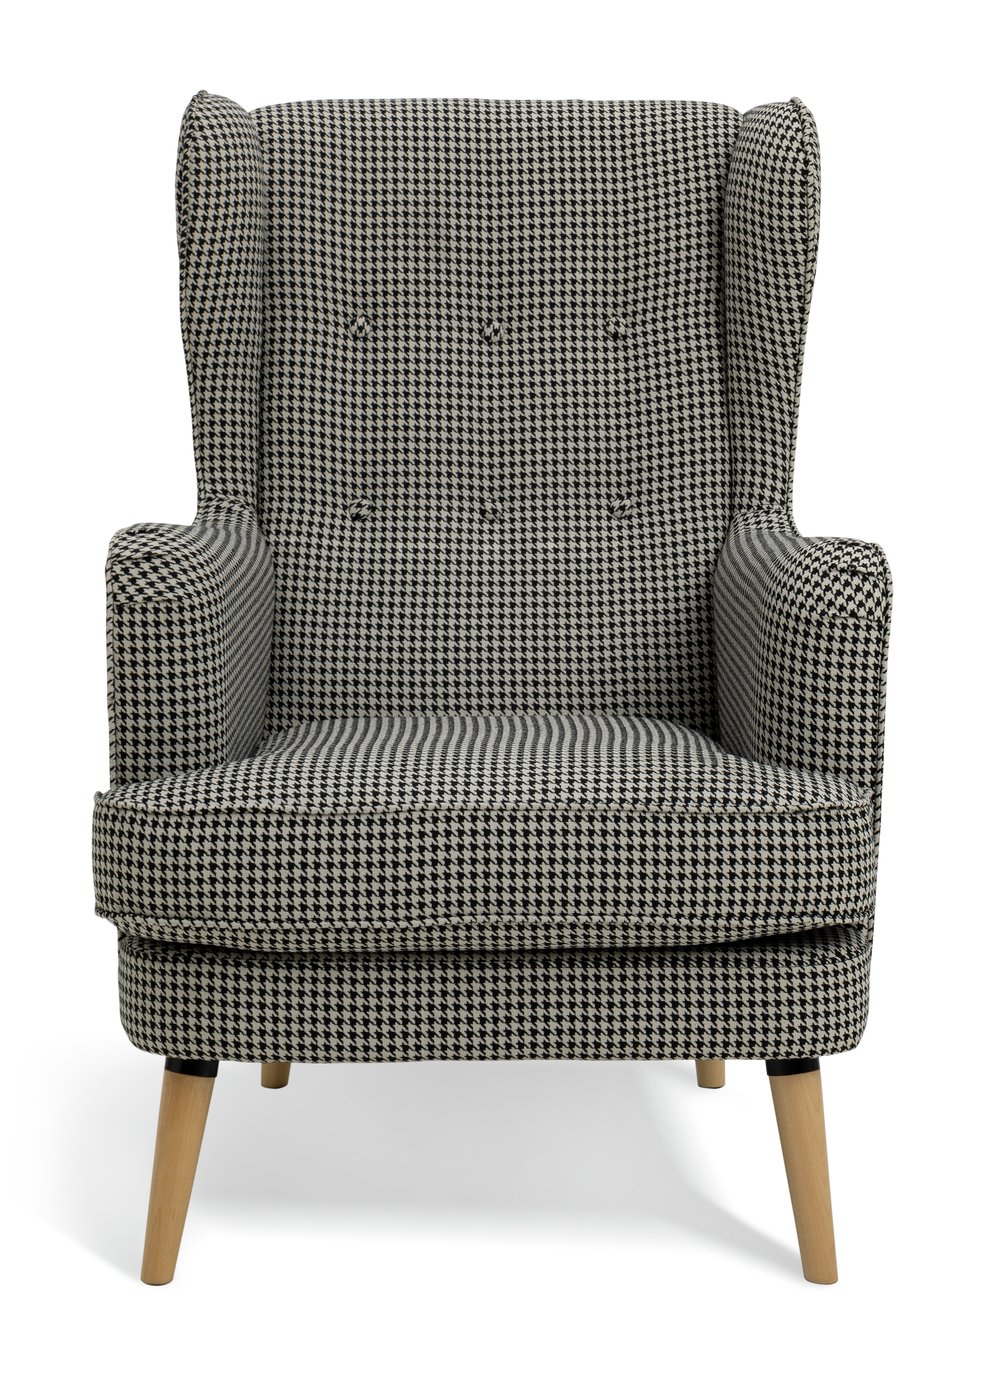 Habitat Callie Fabric Wingback Chair - Black & White